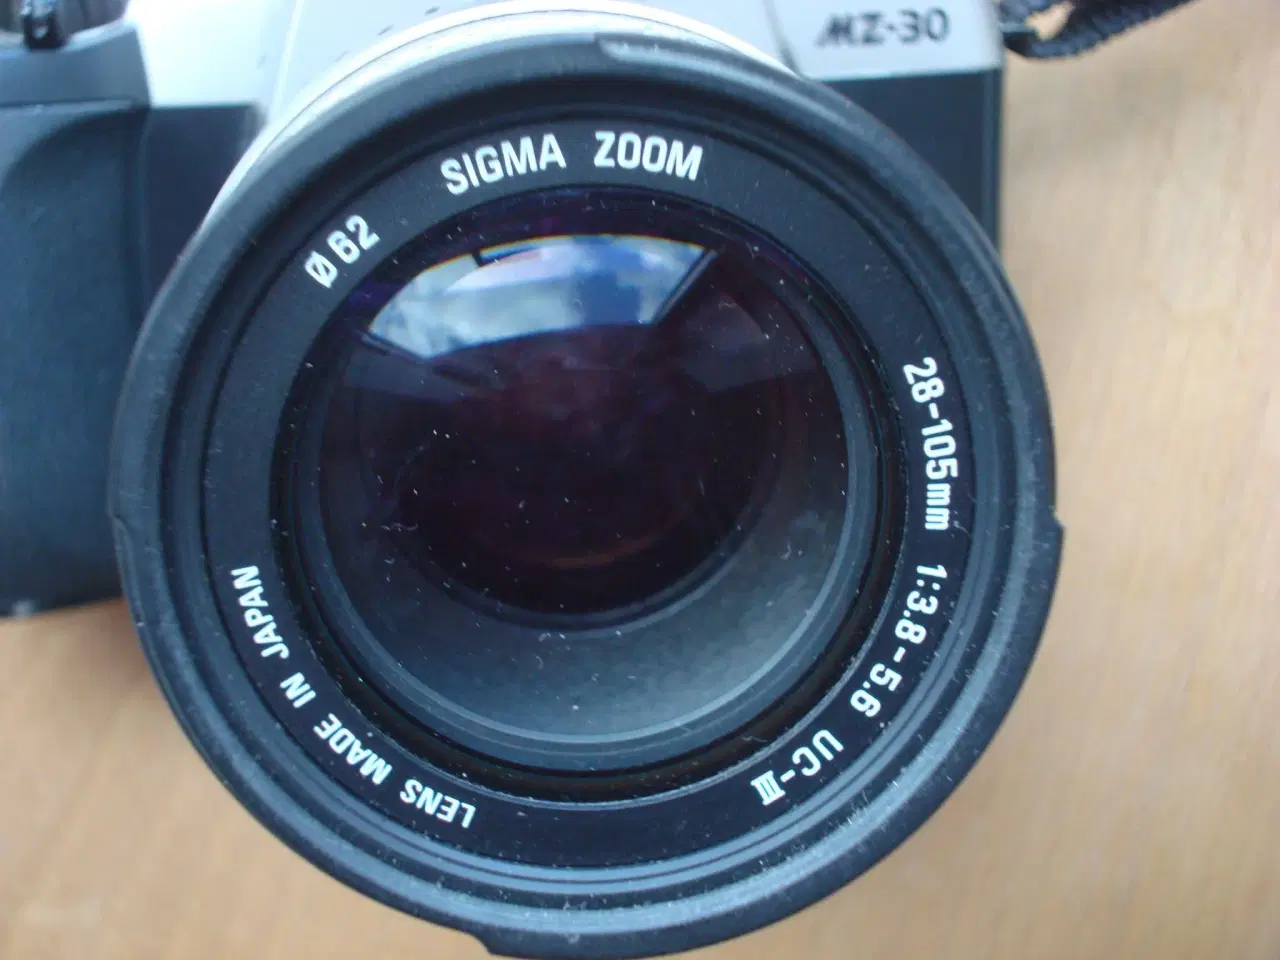 Billede 5 - Pentax MZ-30 analoge kamera